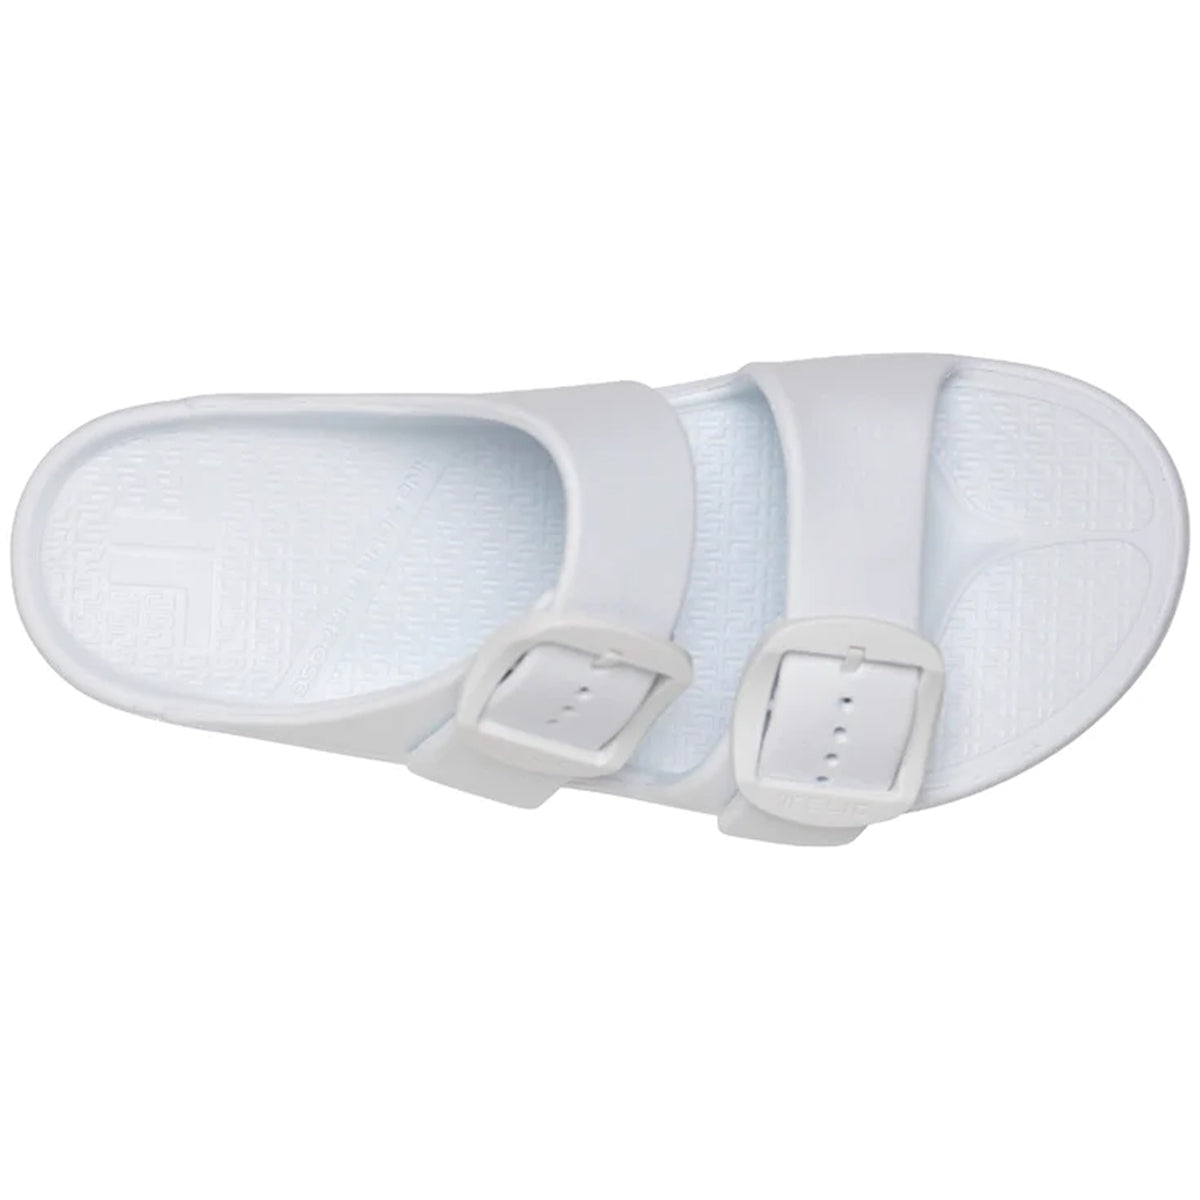 Telic Women's Boise Bliss Premium Soft Arch Support Comfort Sandals Telic